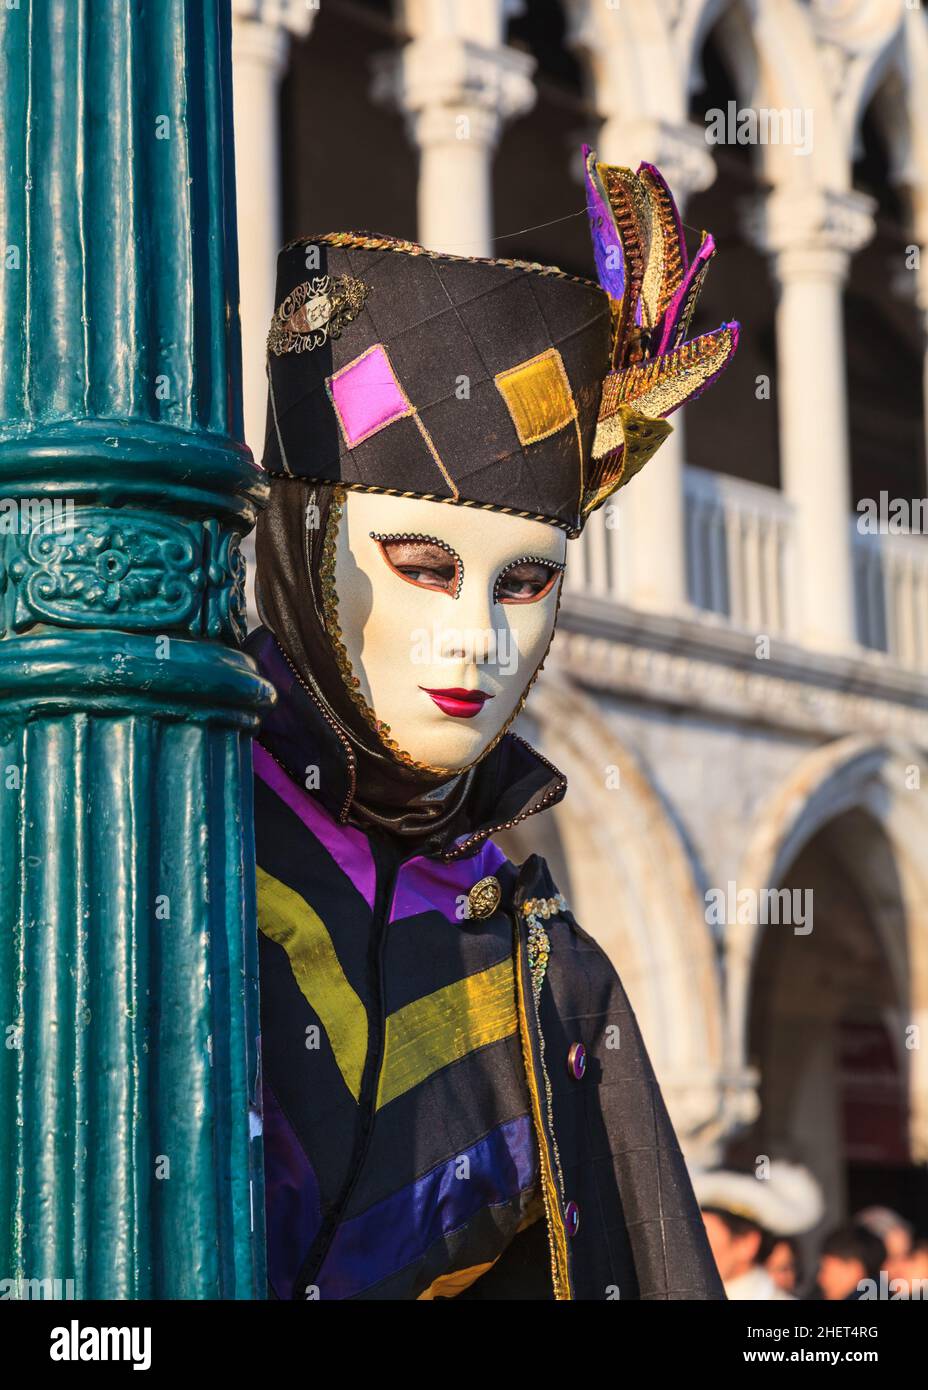 Woman in historic Venetian fancy dress costume, hat and mask, poses at Venice Carnival, Carnevale di Venezia, Italy Stock Photo